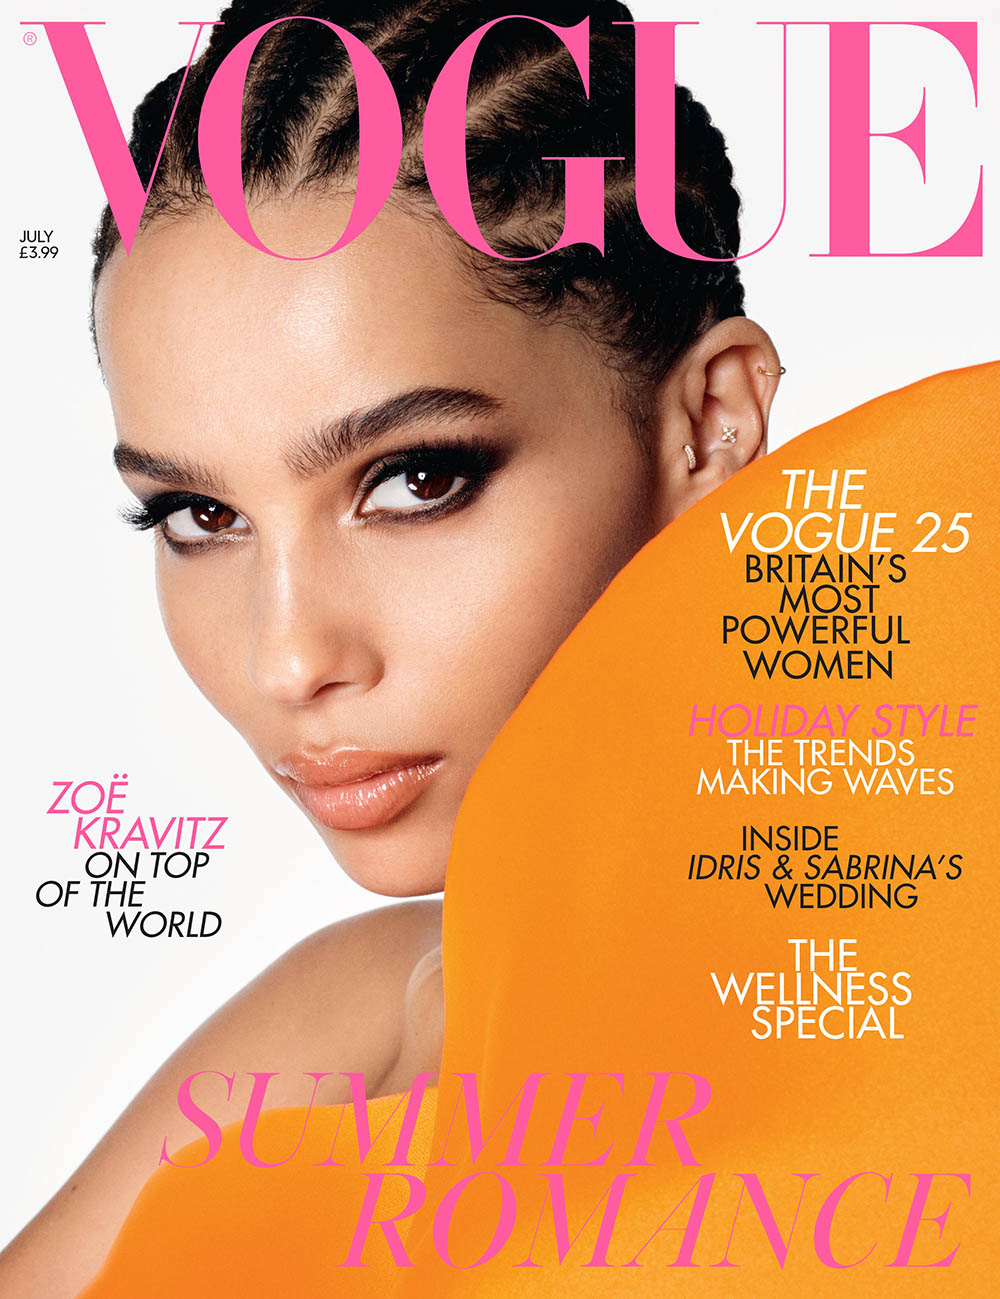 Zoë Kravitz covers British Vogue July 2019 by Steven Meisel